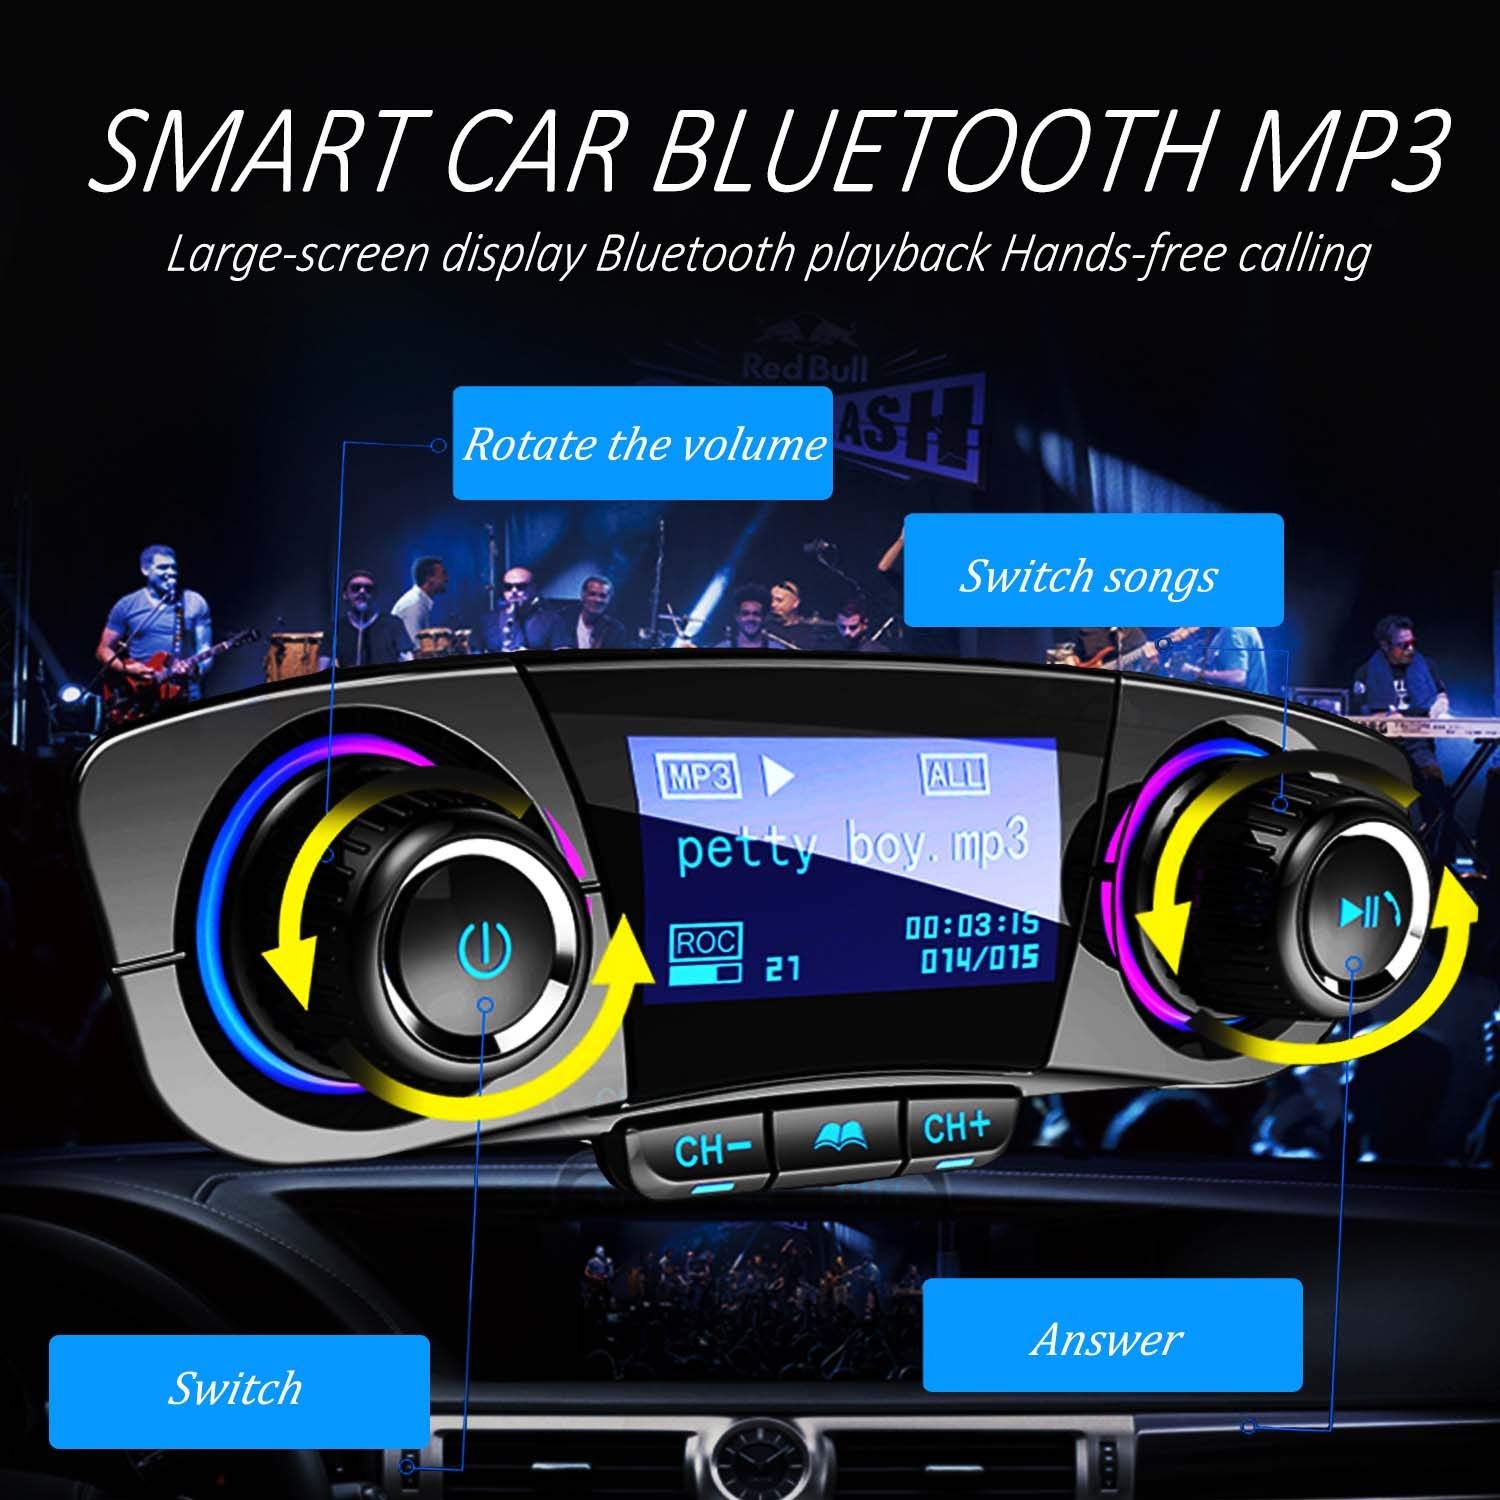 Bluetooth FM Transmitter Car MP3 Player Hands-Free Car Kit Wireless Radio Audio Adapter with Dual USB 5V 2.1A USB Port, U Disk, TF Card, Folder Playback, AUX Input Output, Voice Navigation